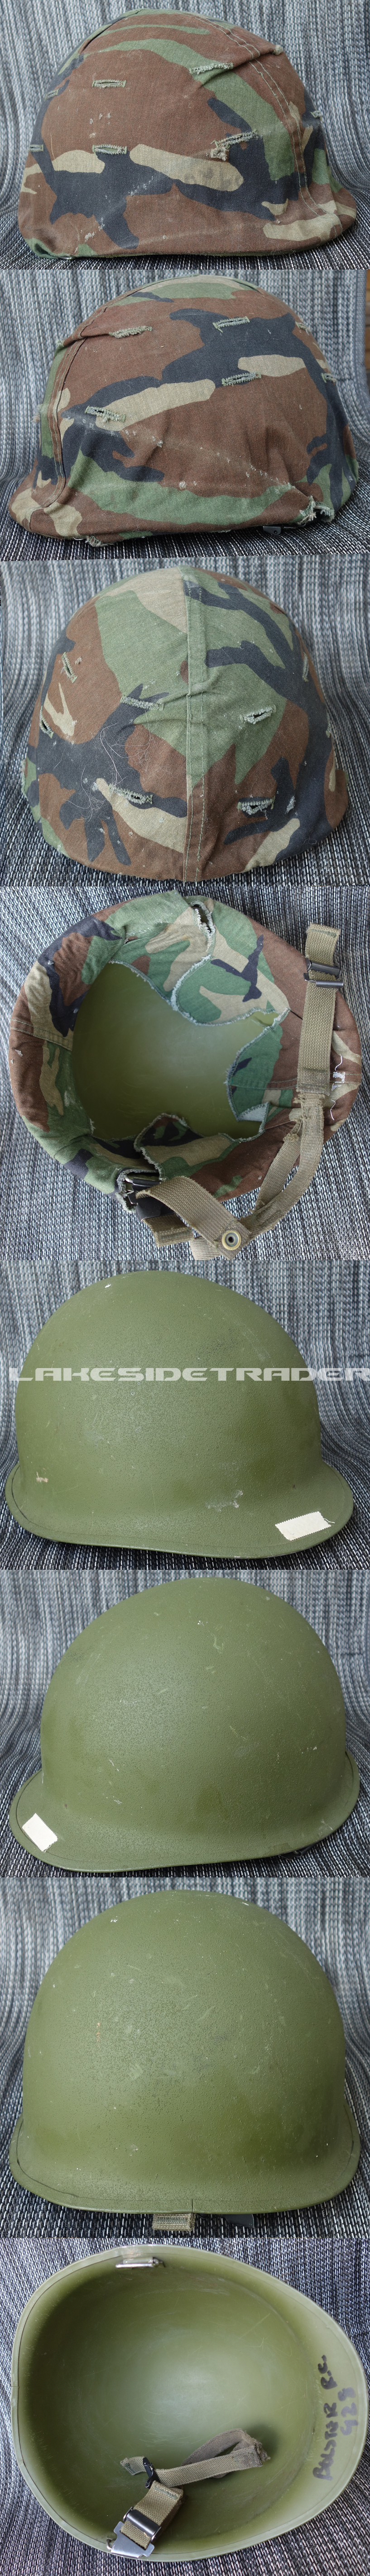 US M1 Combat Helmet w Camo Cover Vietnam Era